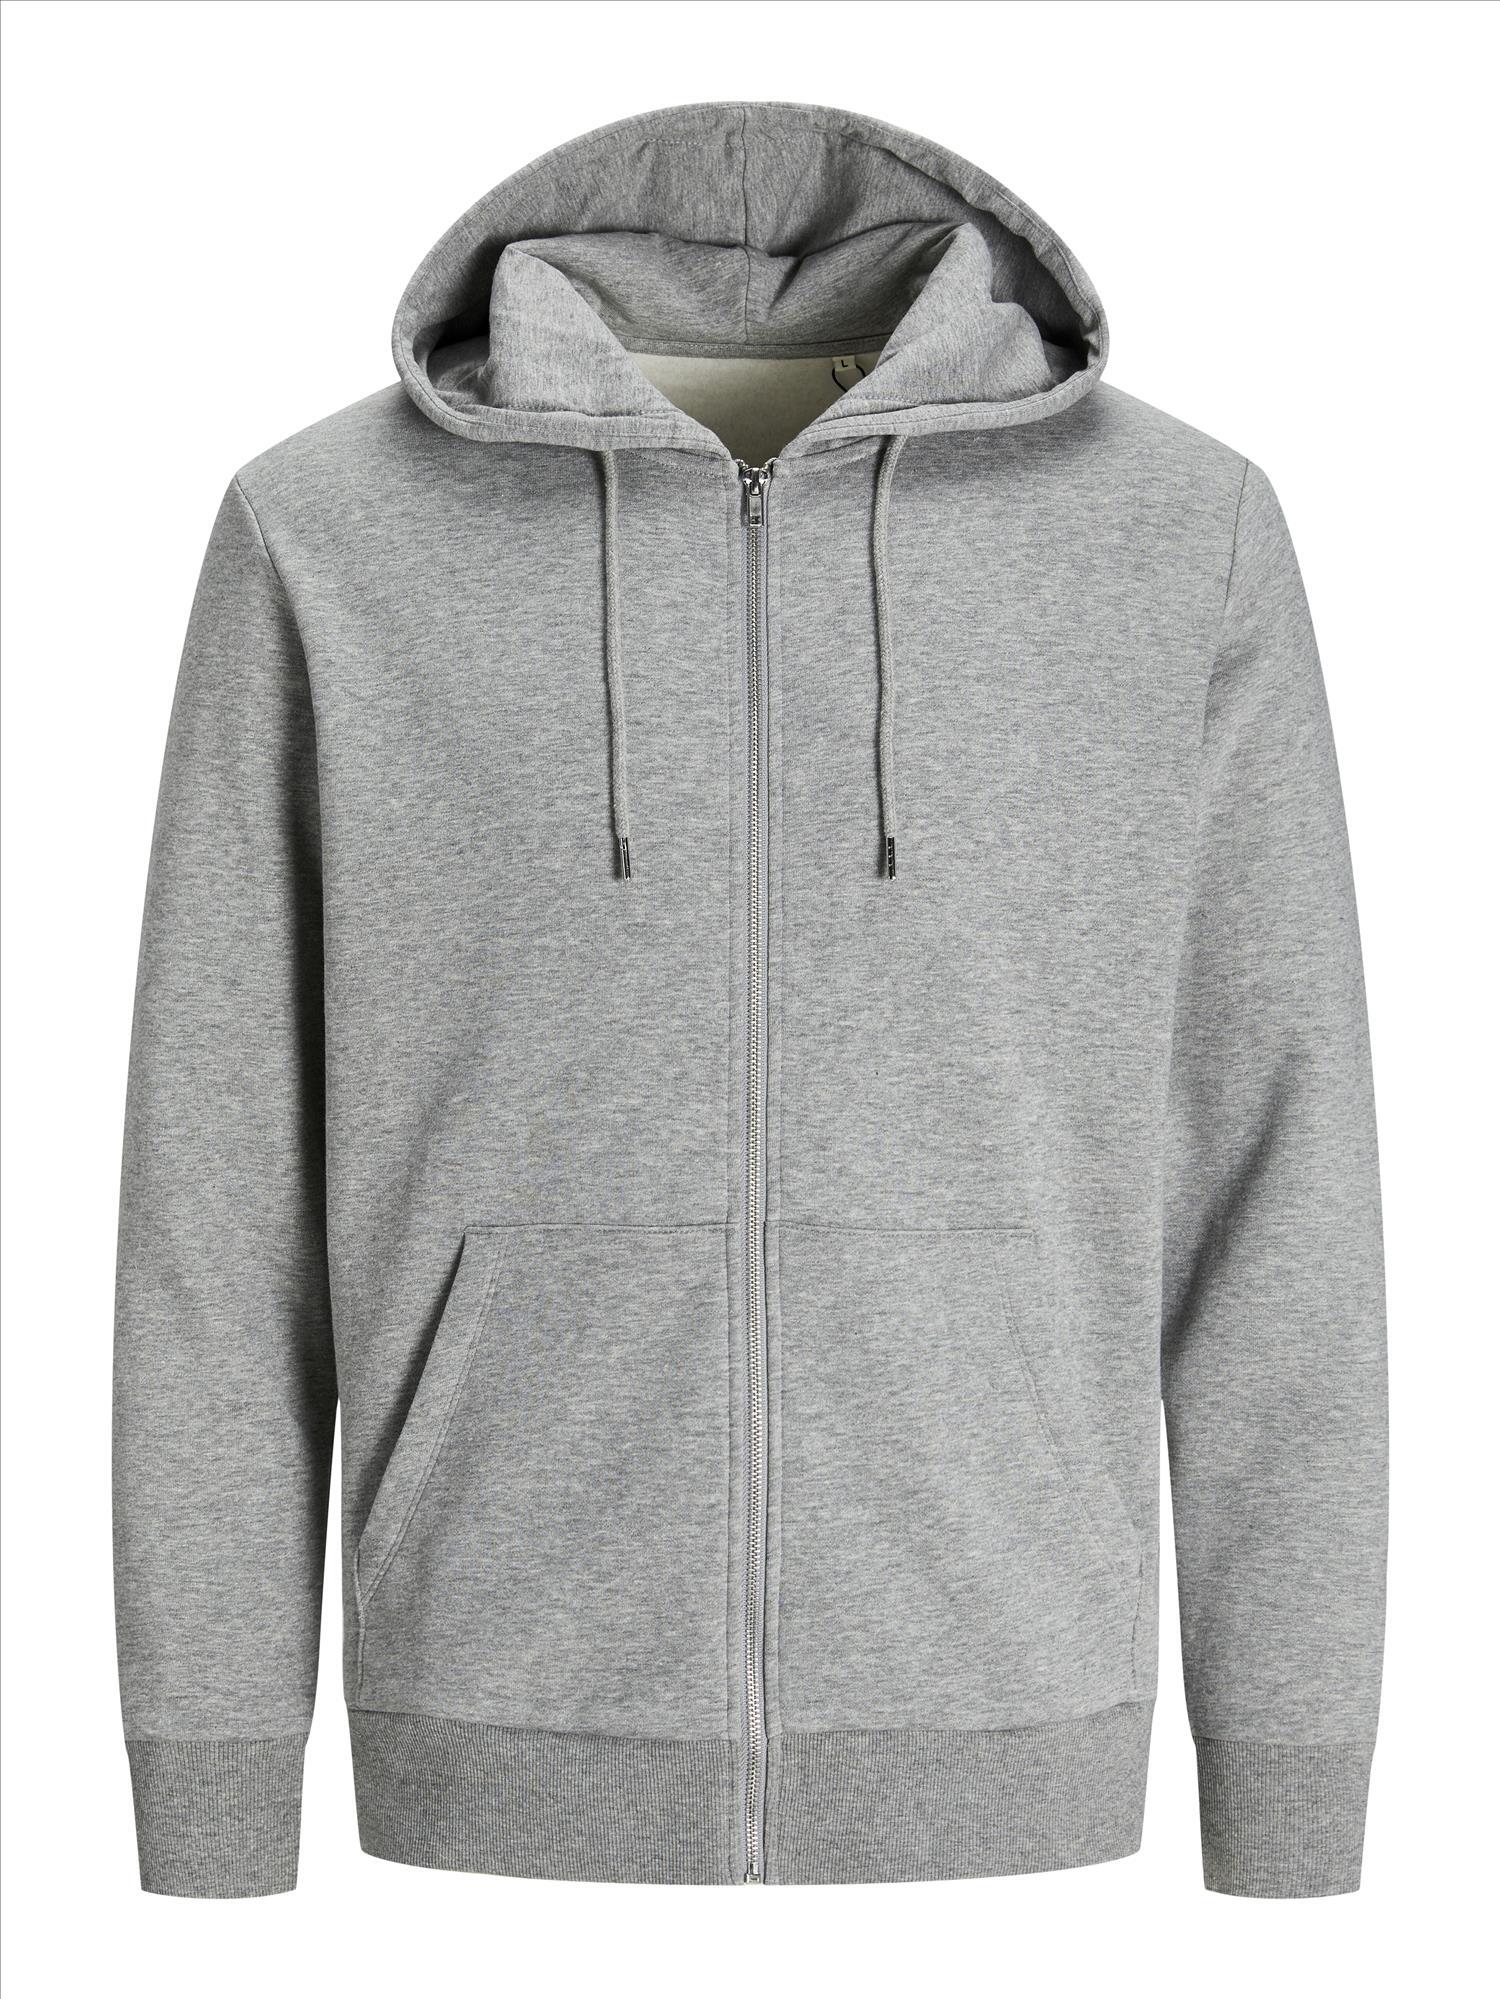 Jack & Jones Hoodie light grey melange unisex hoodies te personaliseren bedrukbaar